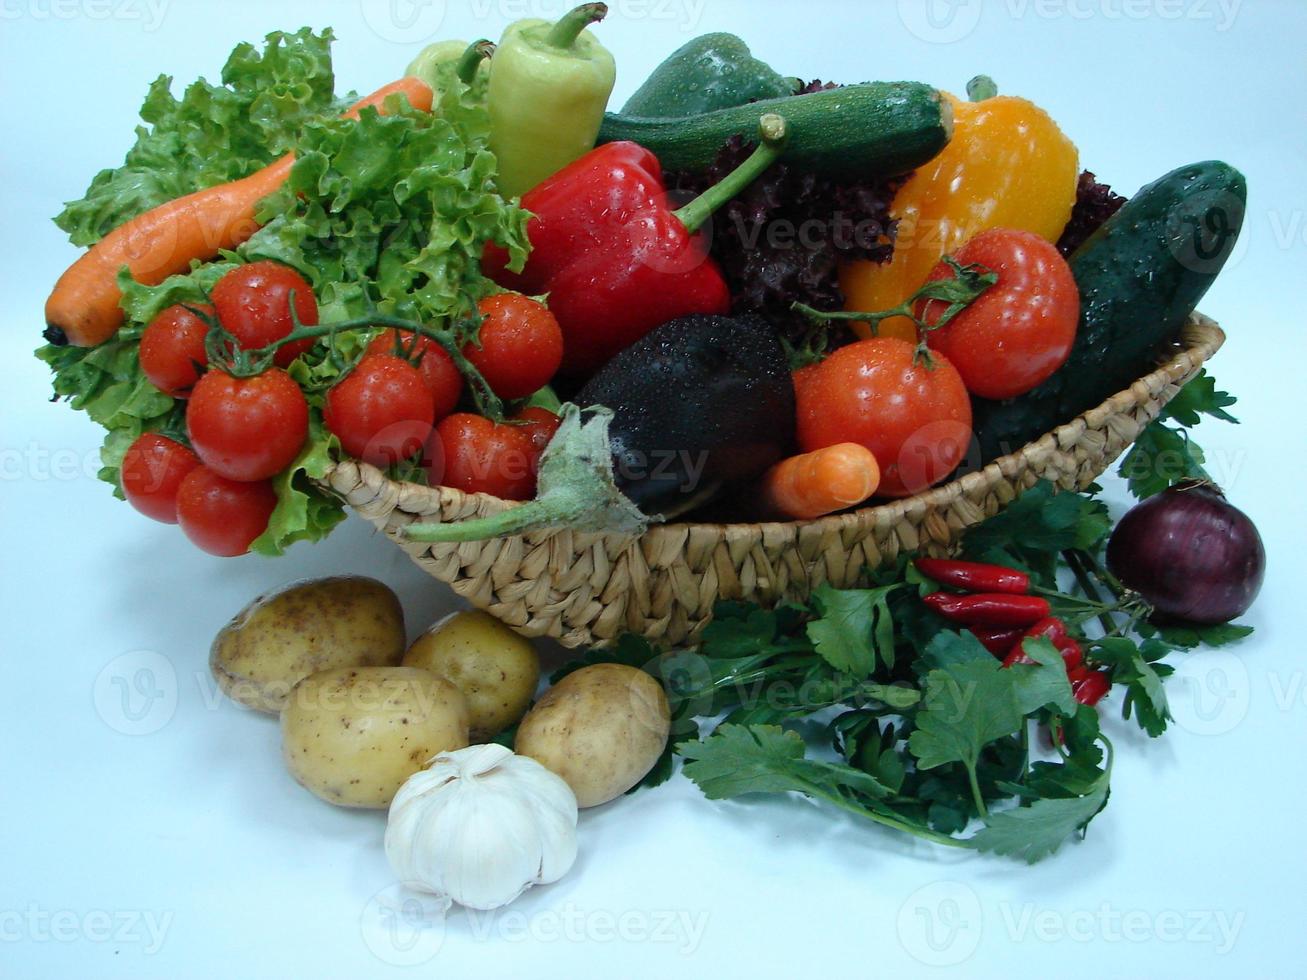 fresh vegetables in basket photo